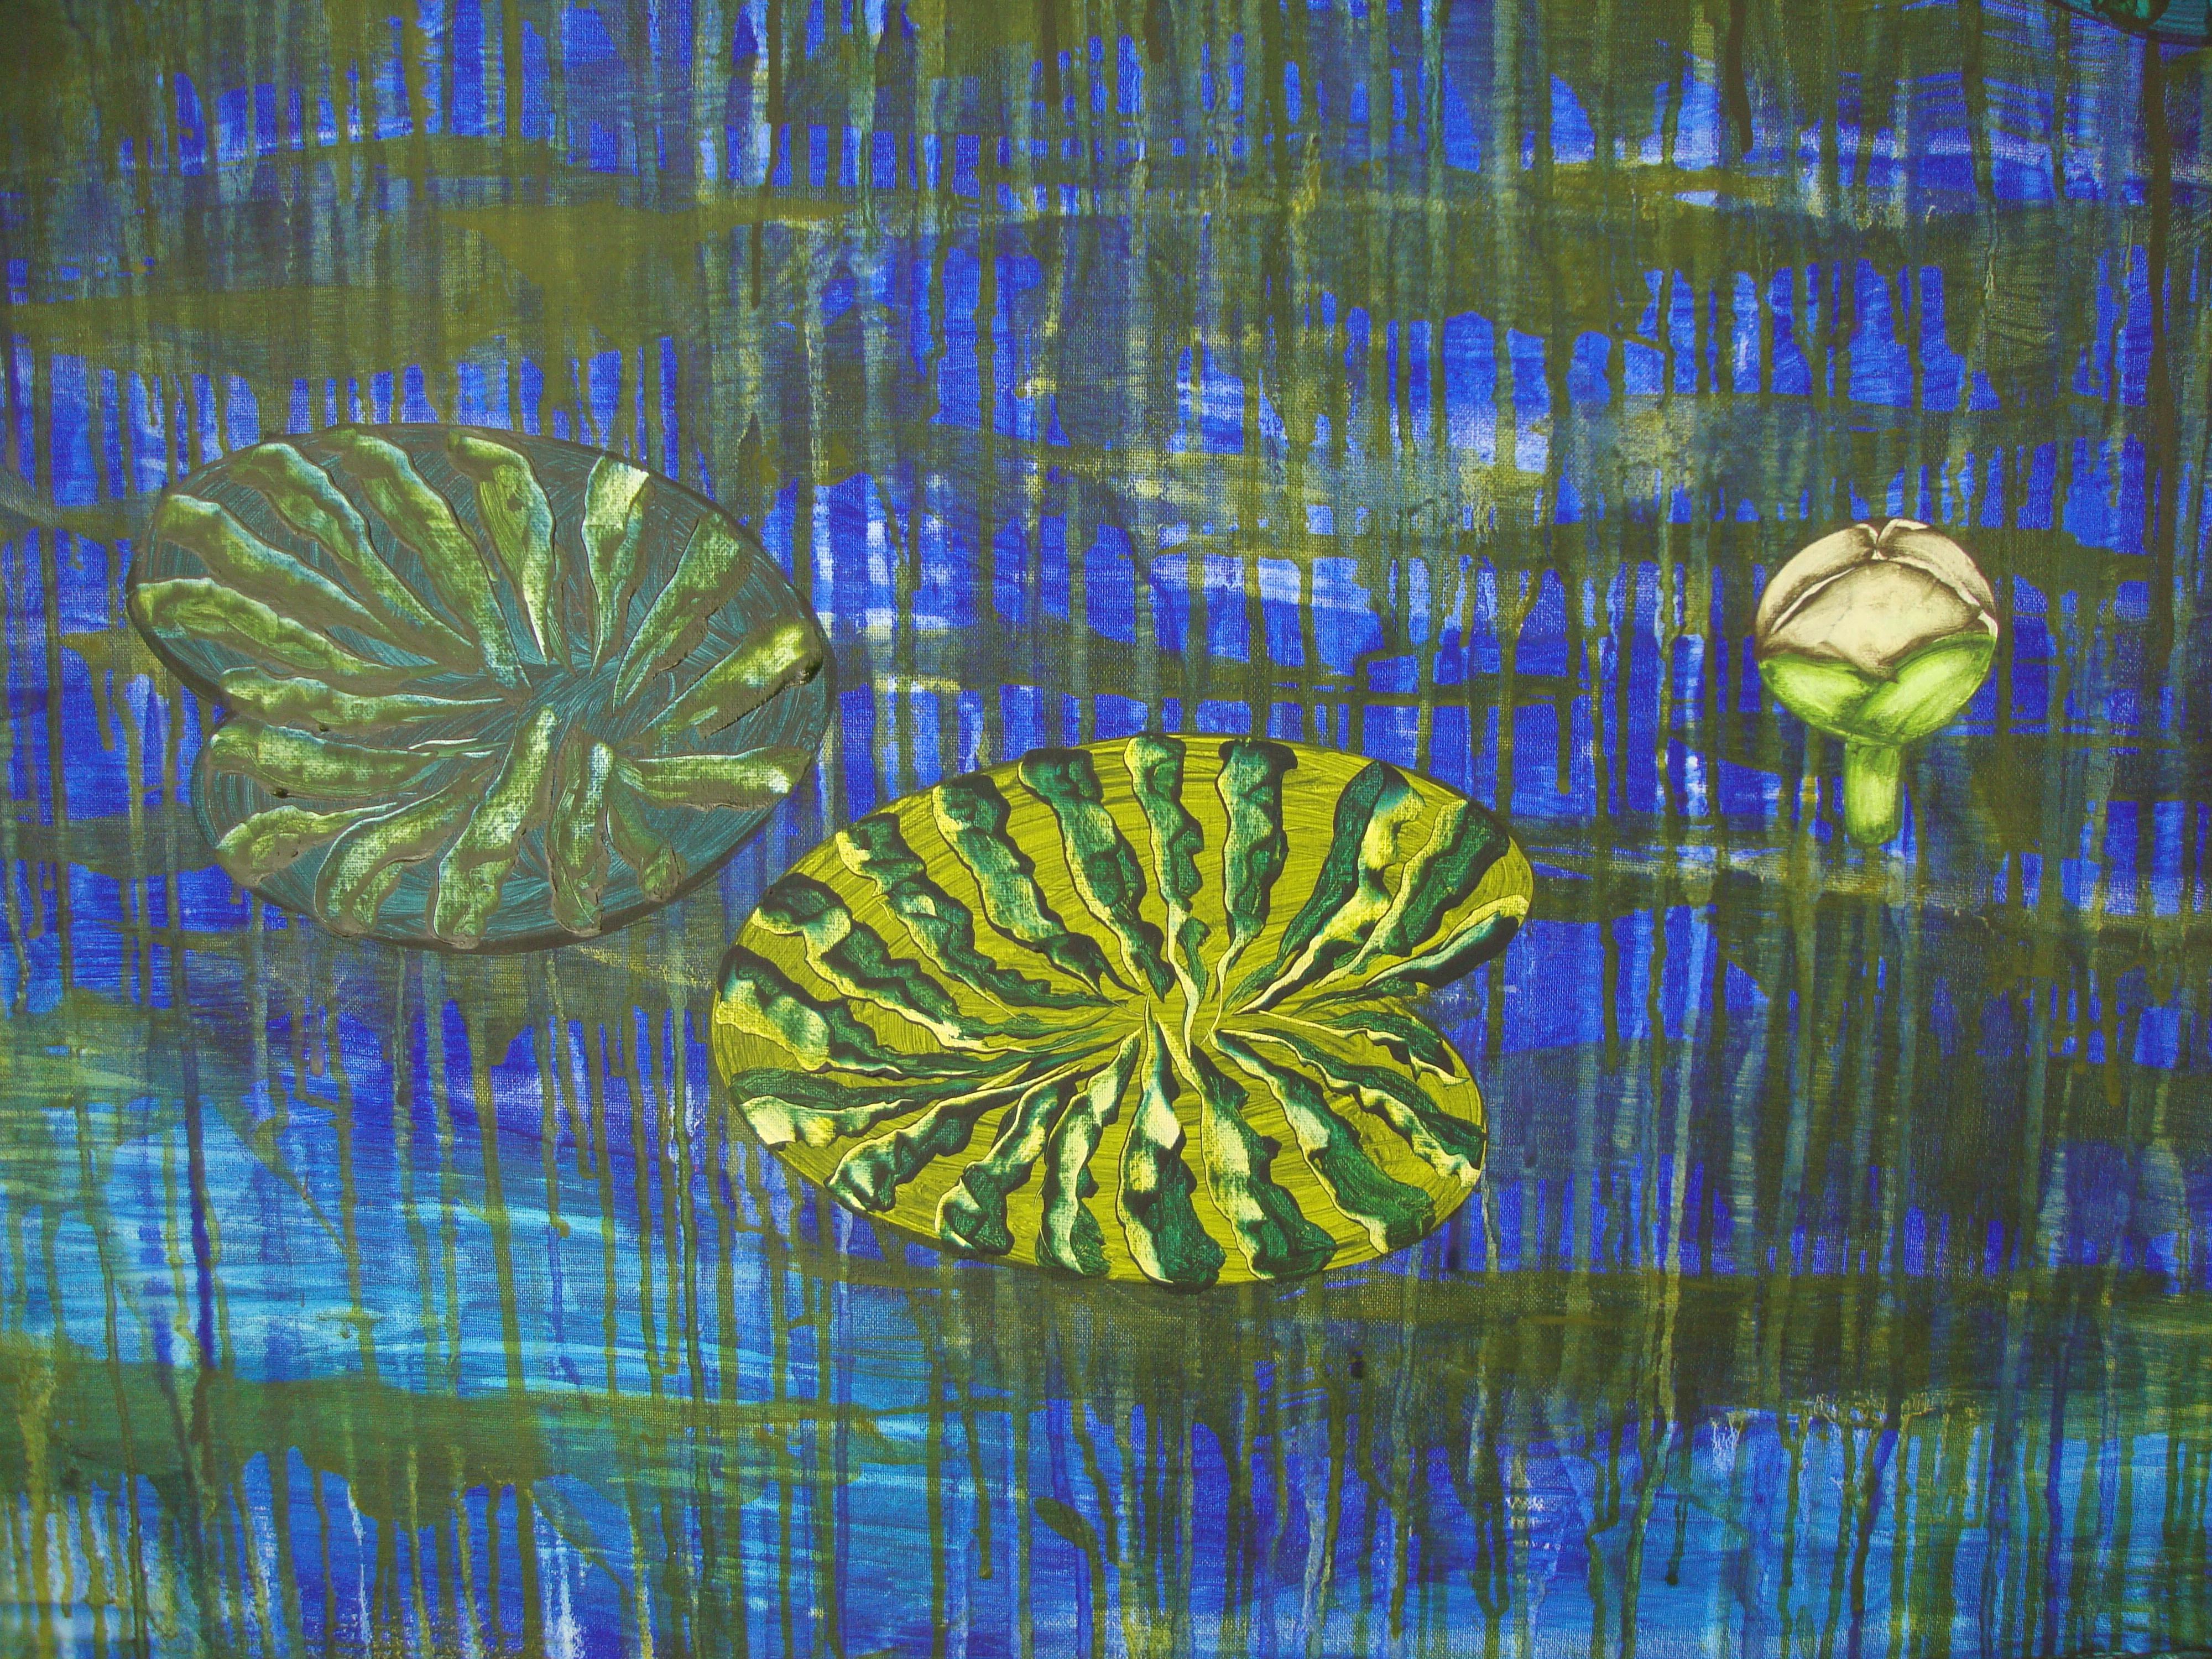 Moon Rose, Öl auf Leinwand, 120x150 cm, 2007 – Painting von Kristine Luize Avotina